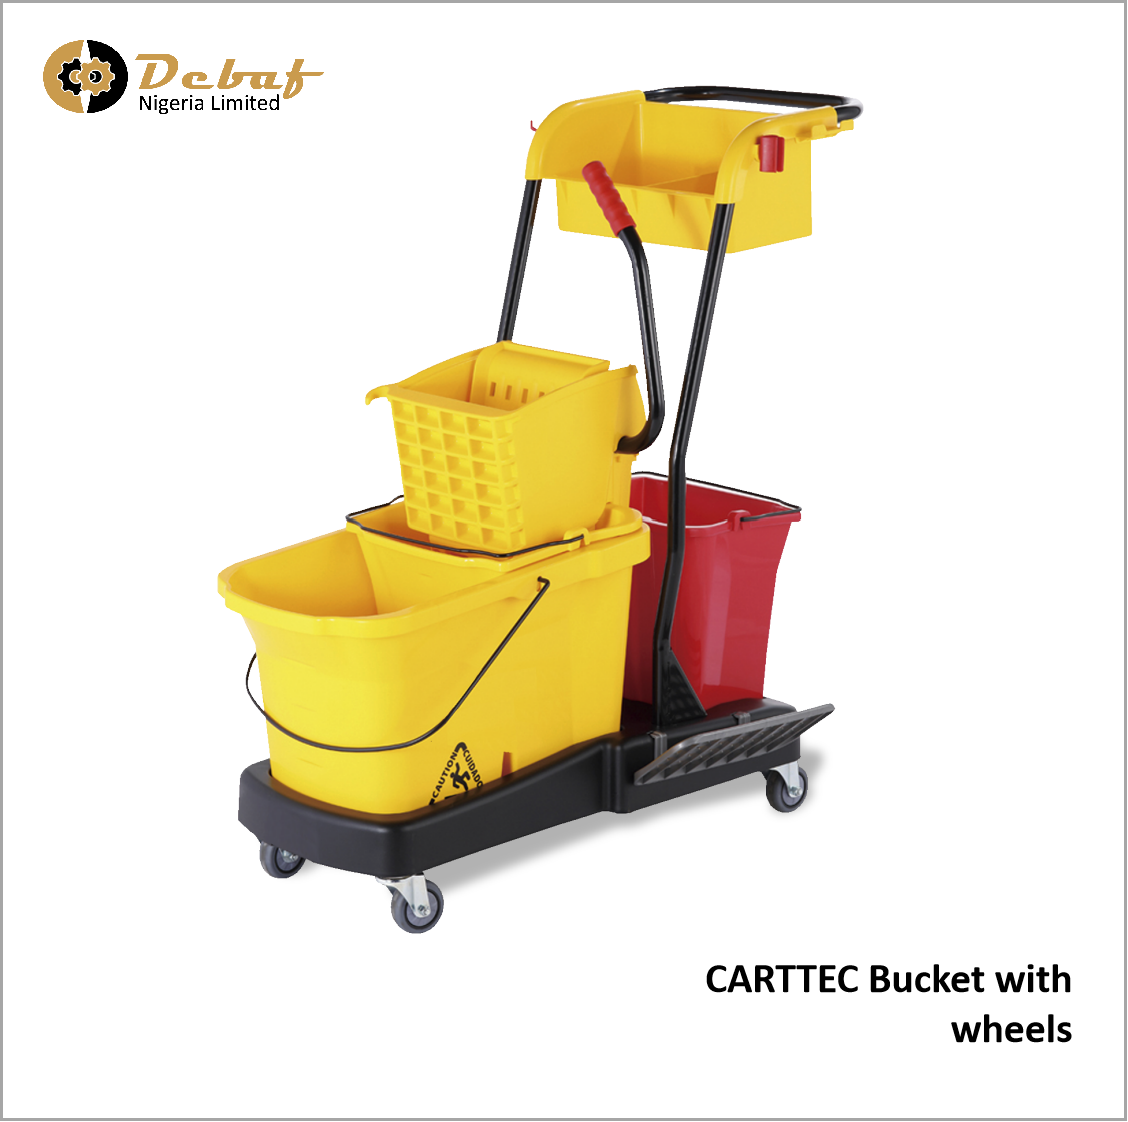 Debaf - CARTTEC Bucket with wheels